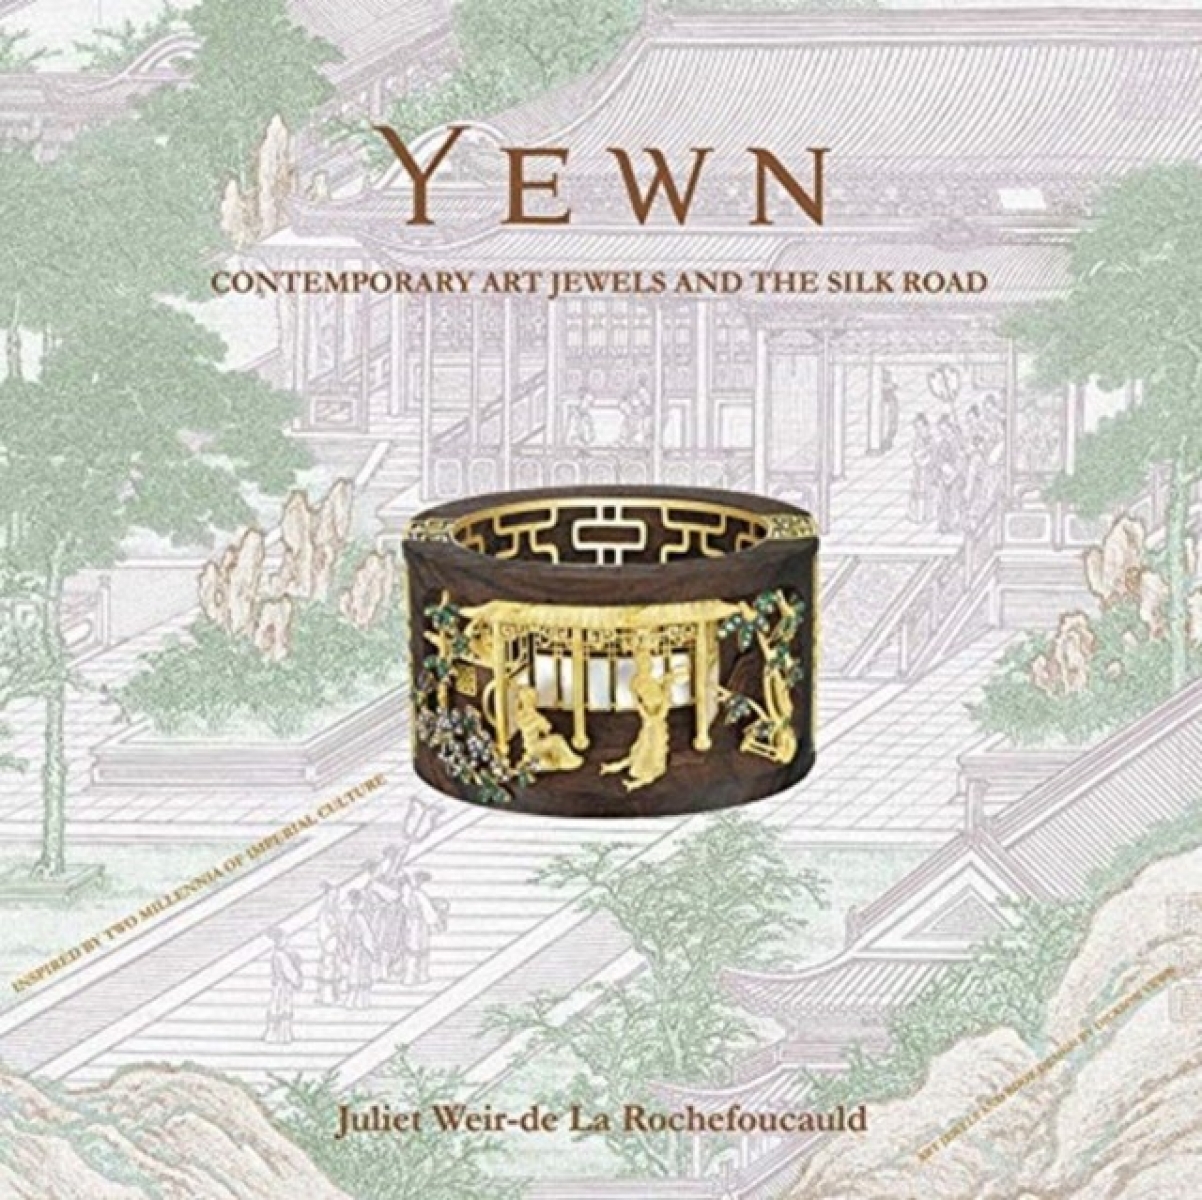 Rochefoucauld Juliet de la, Yewn Dickson Yewn: Contemporary Jewels and the Silk Road 